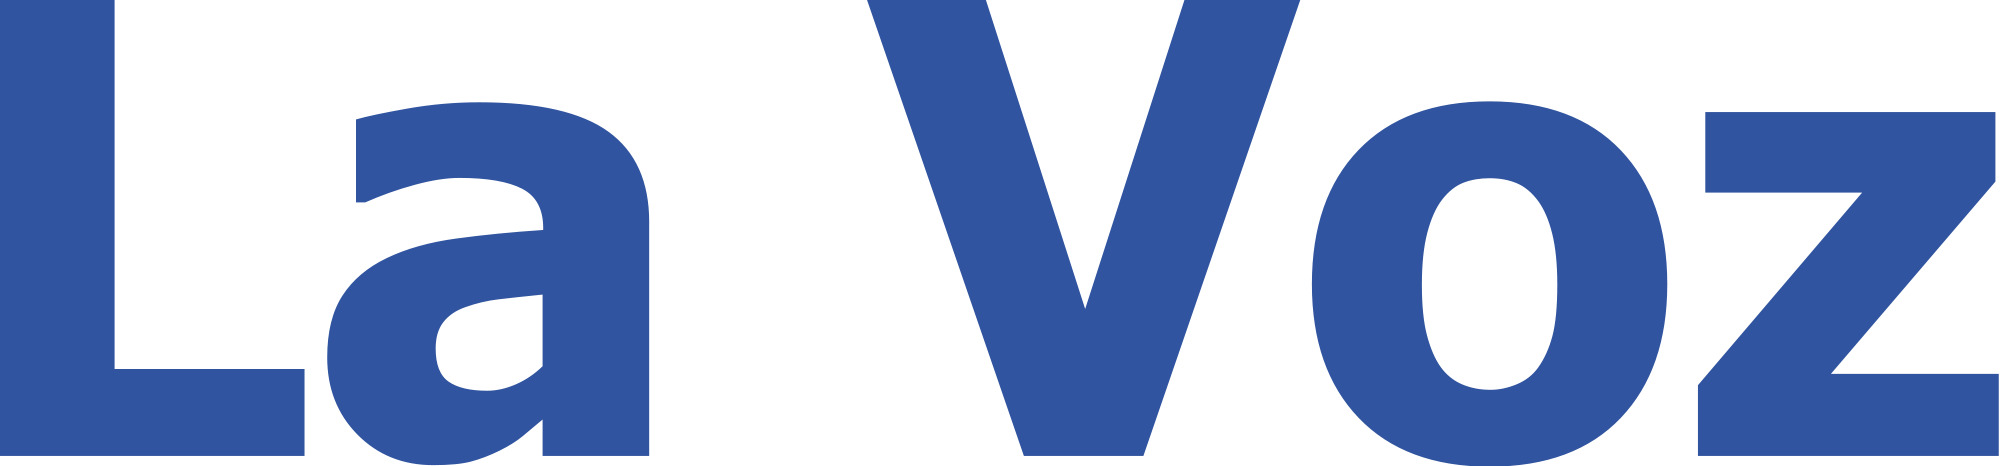 Newspaper La Voz Logo png icons